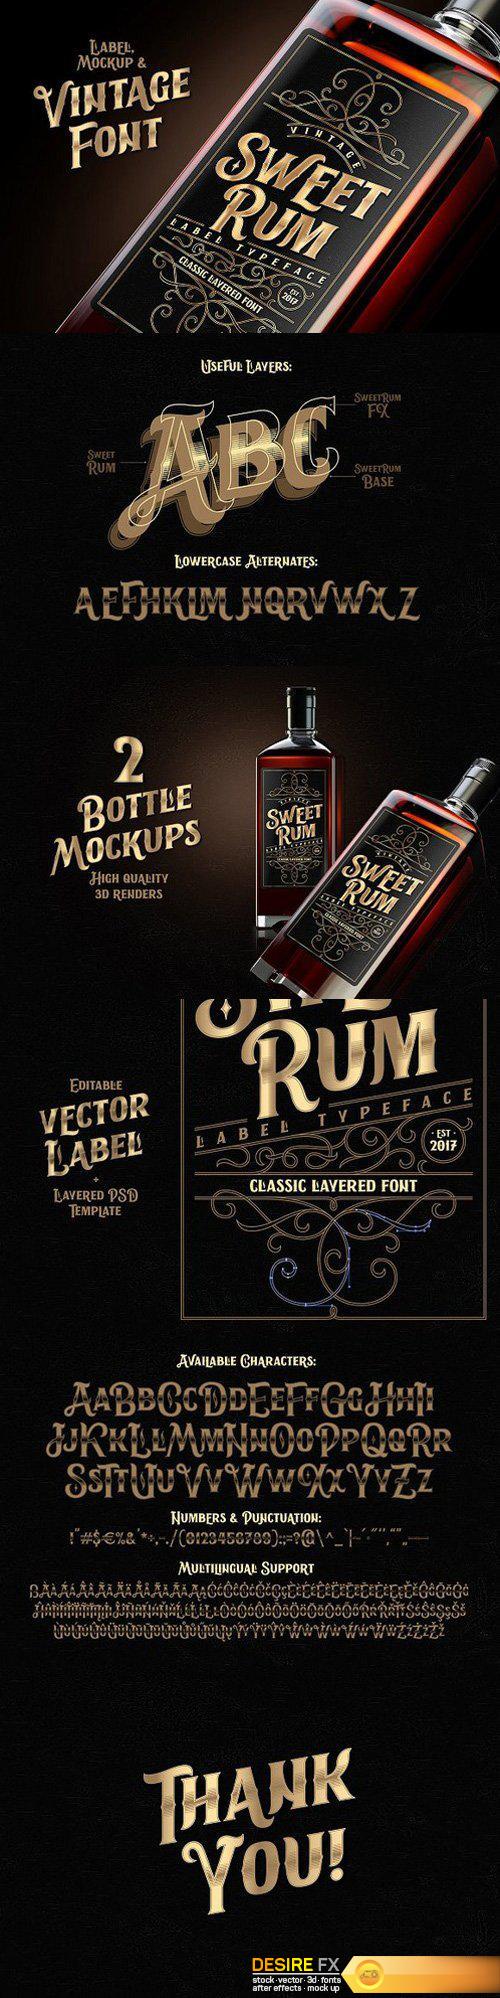 CM - Sweet Rum Font, Label, Mockup! 1782899